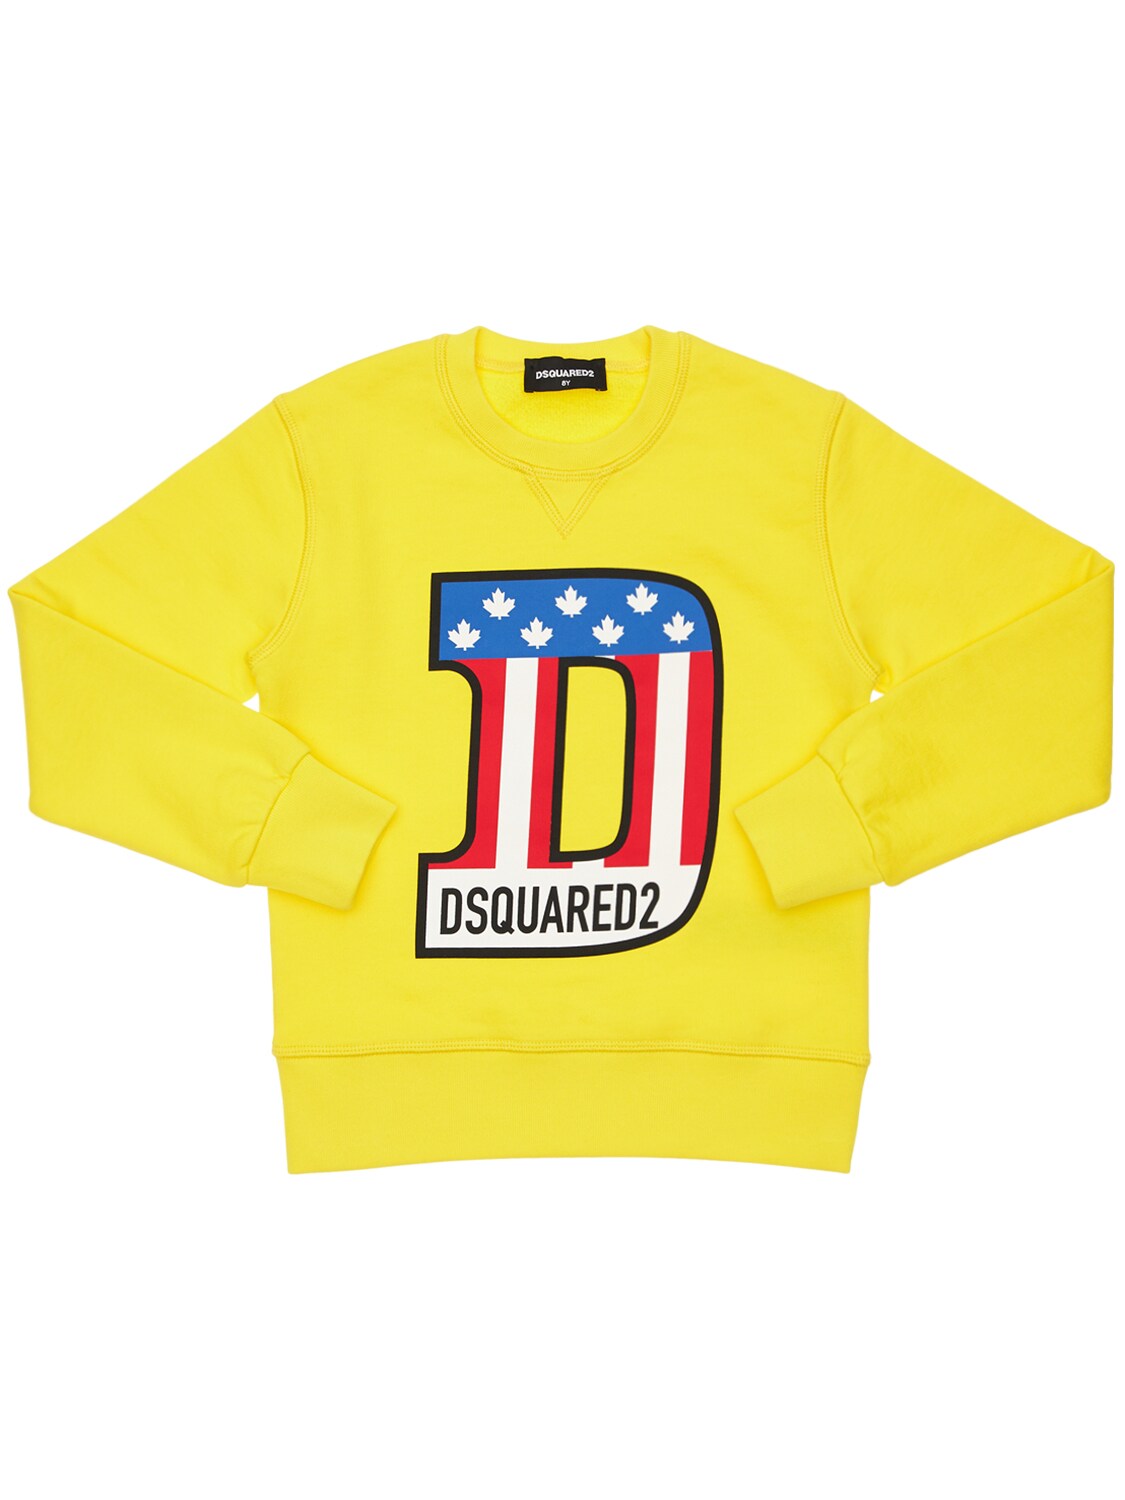 Dsquared2 Kids' Printed Cotton Sweatshirt In Yellow